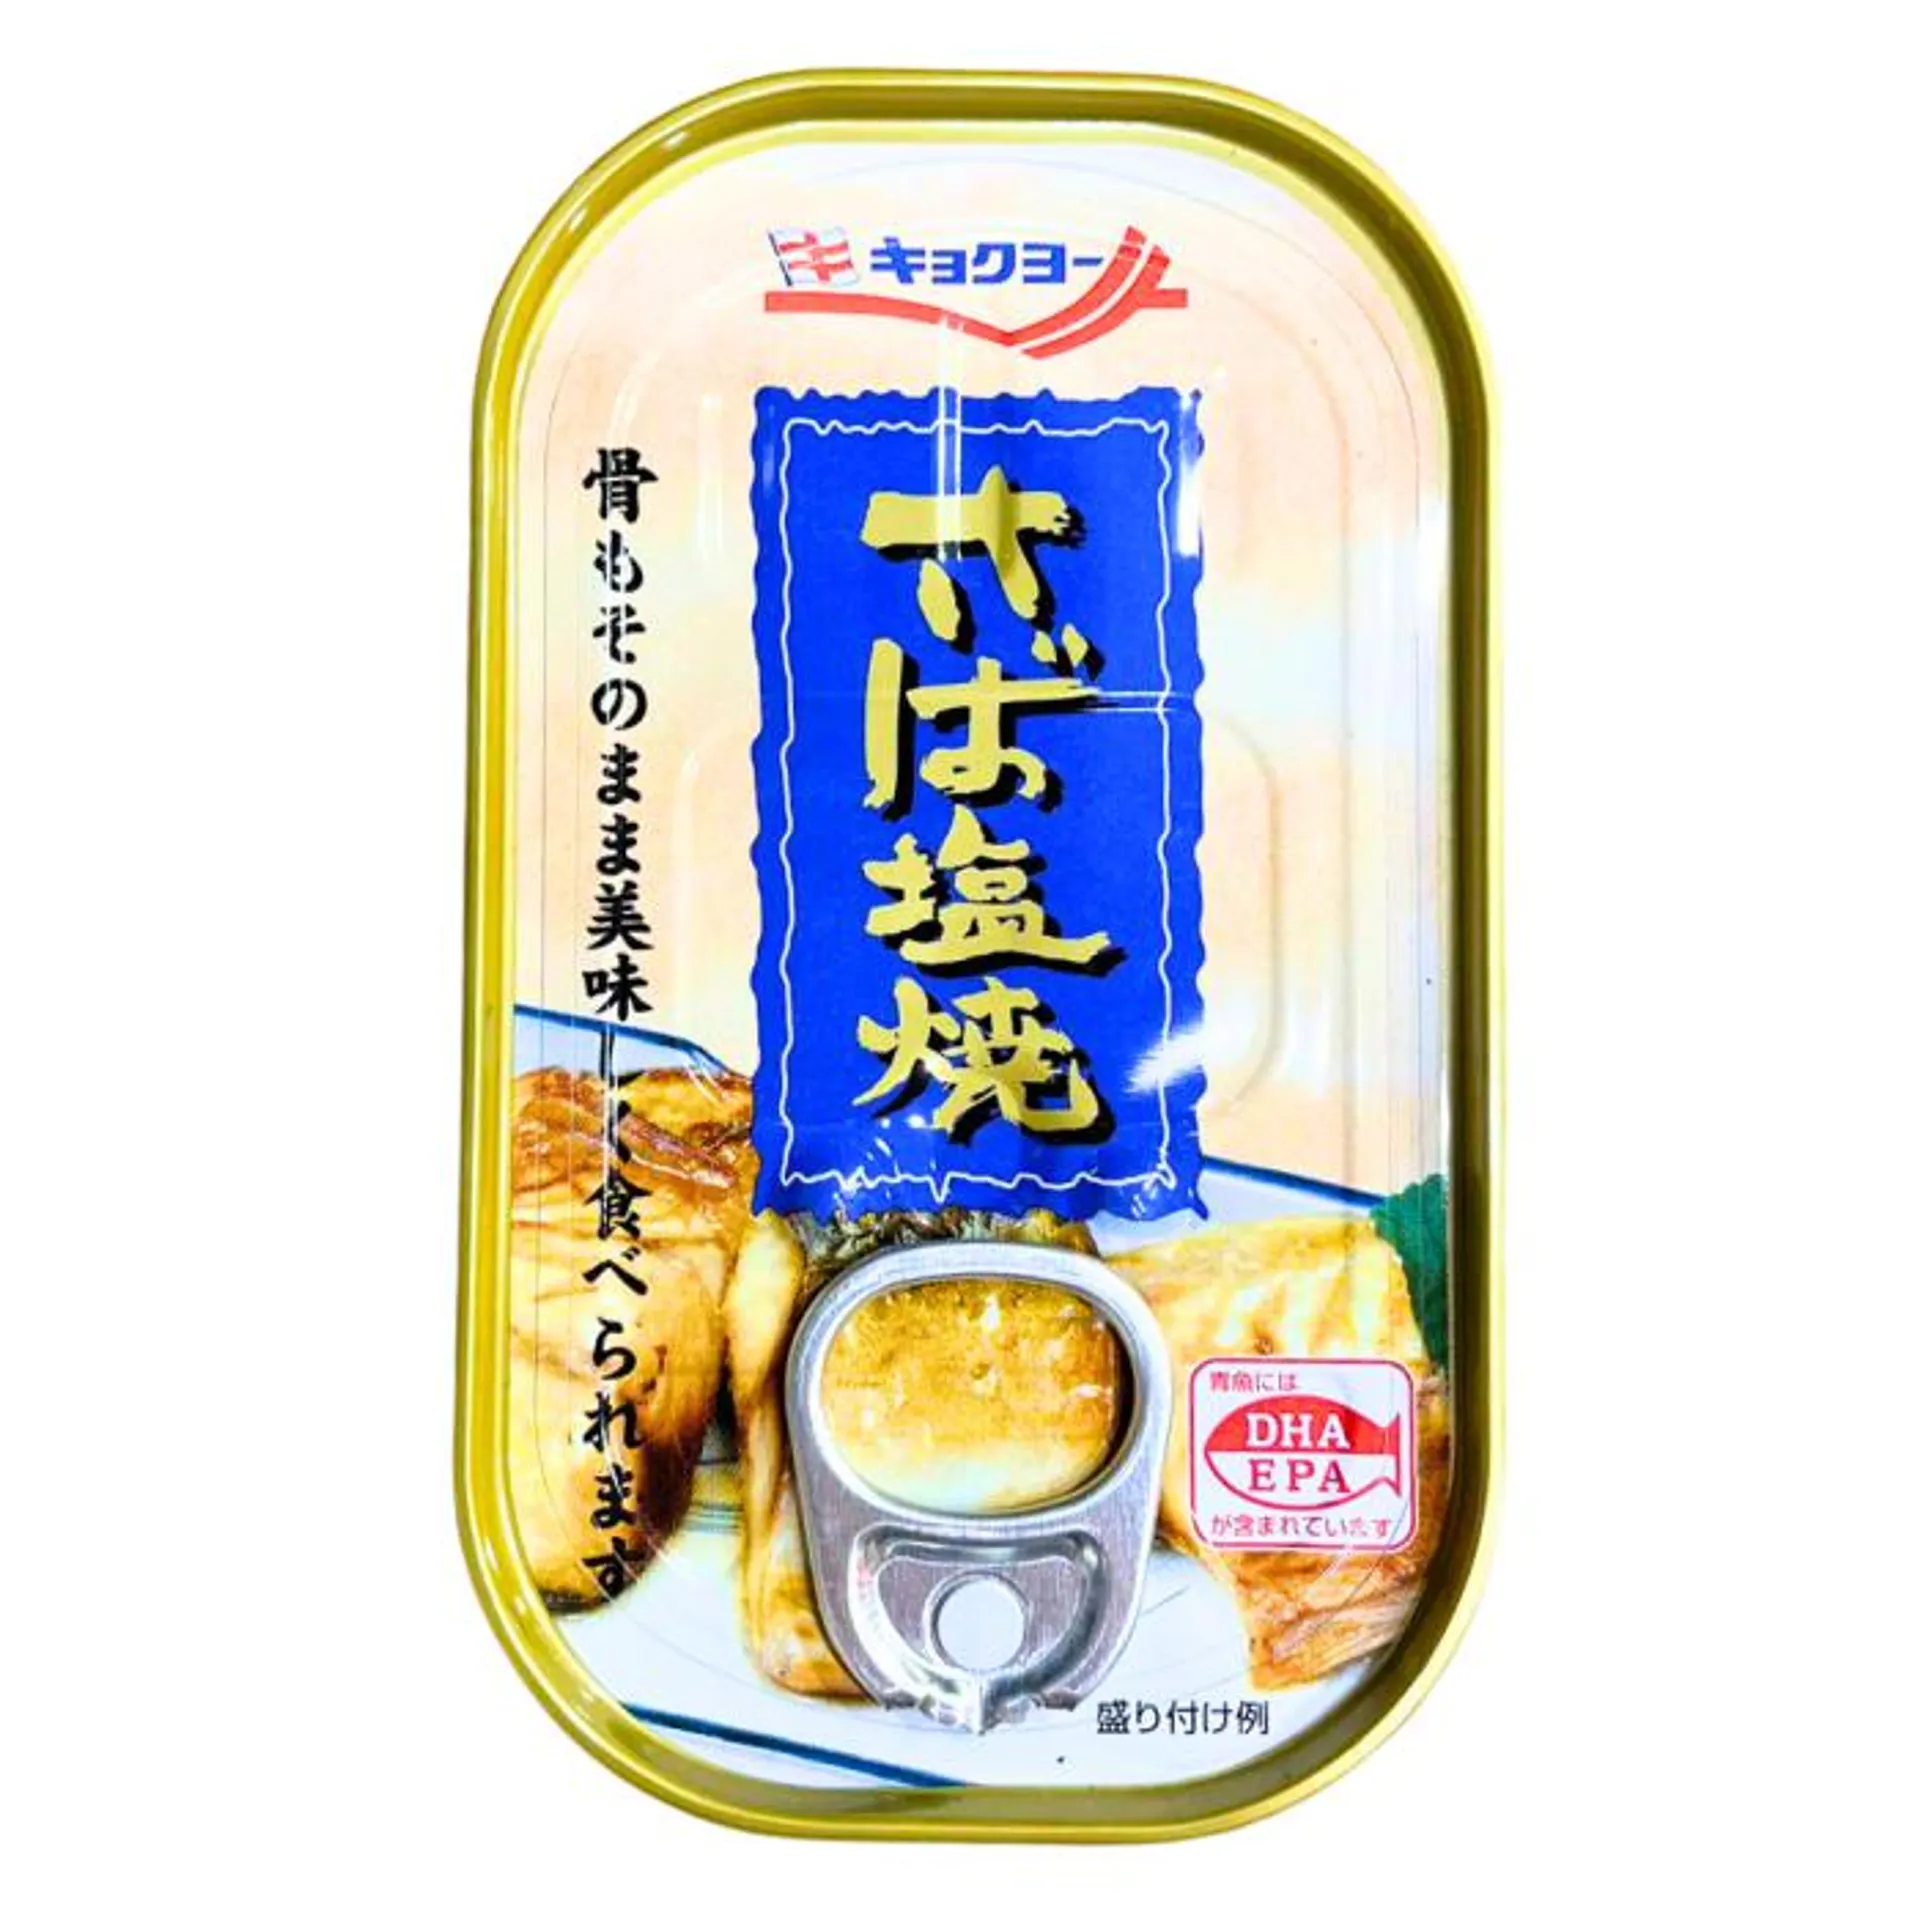 KYOKUYO / MACKAREL SHIOYAKI / CANNED FISH (SCOMBER JAPONICUS) 65g